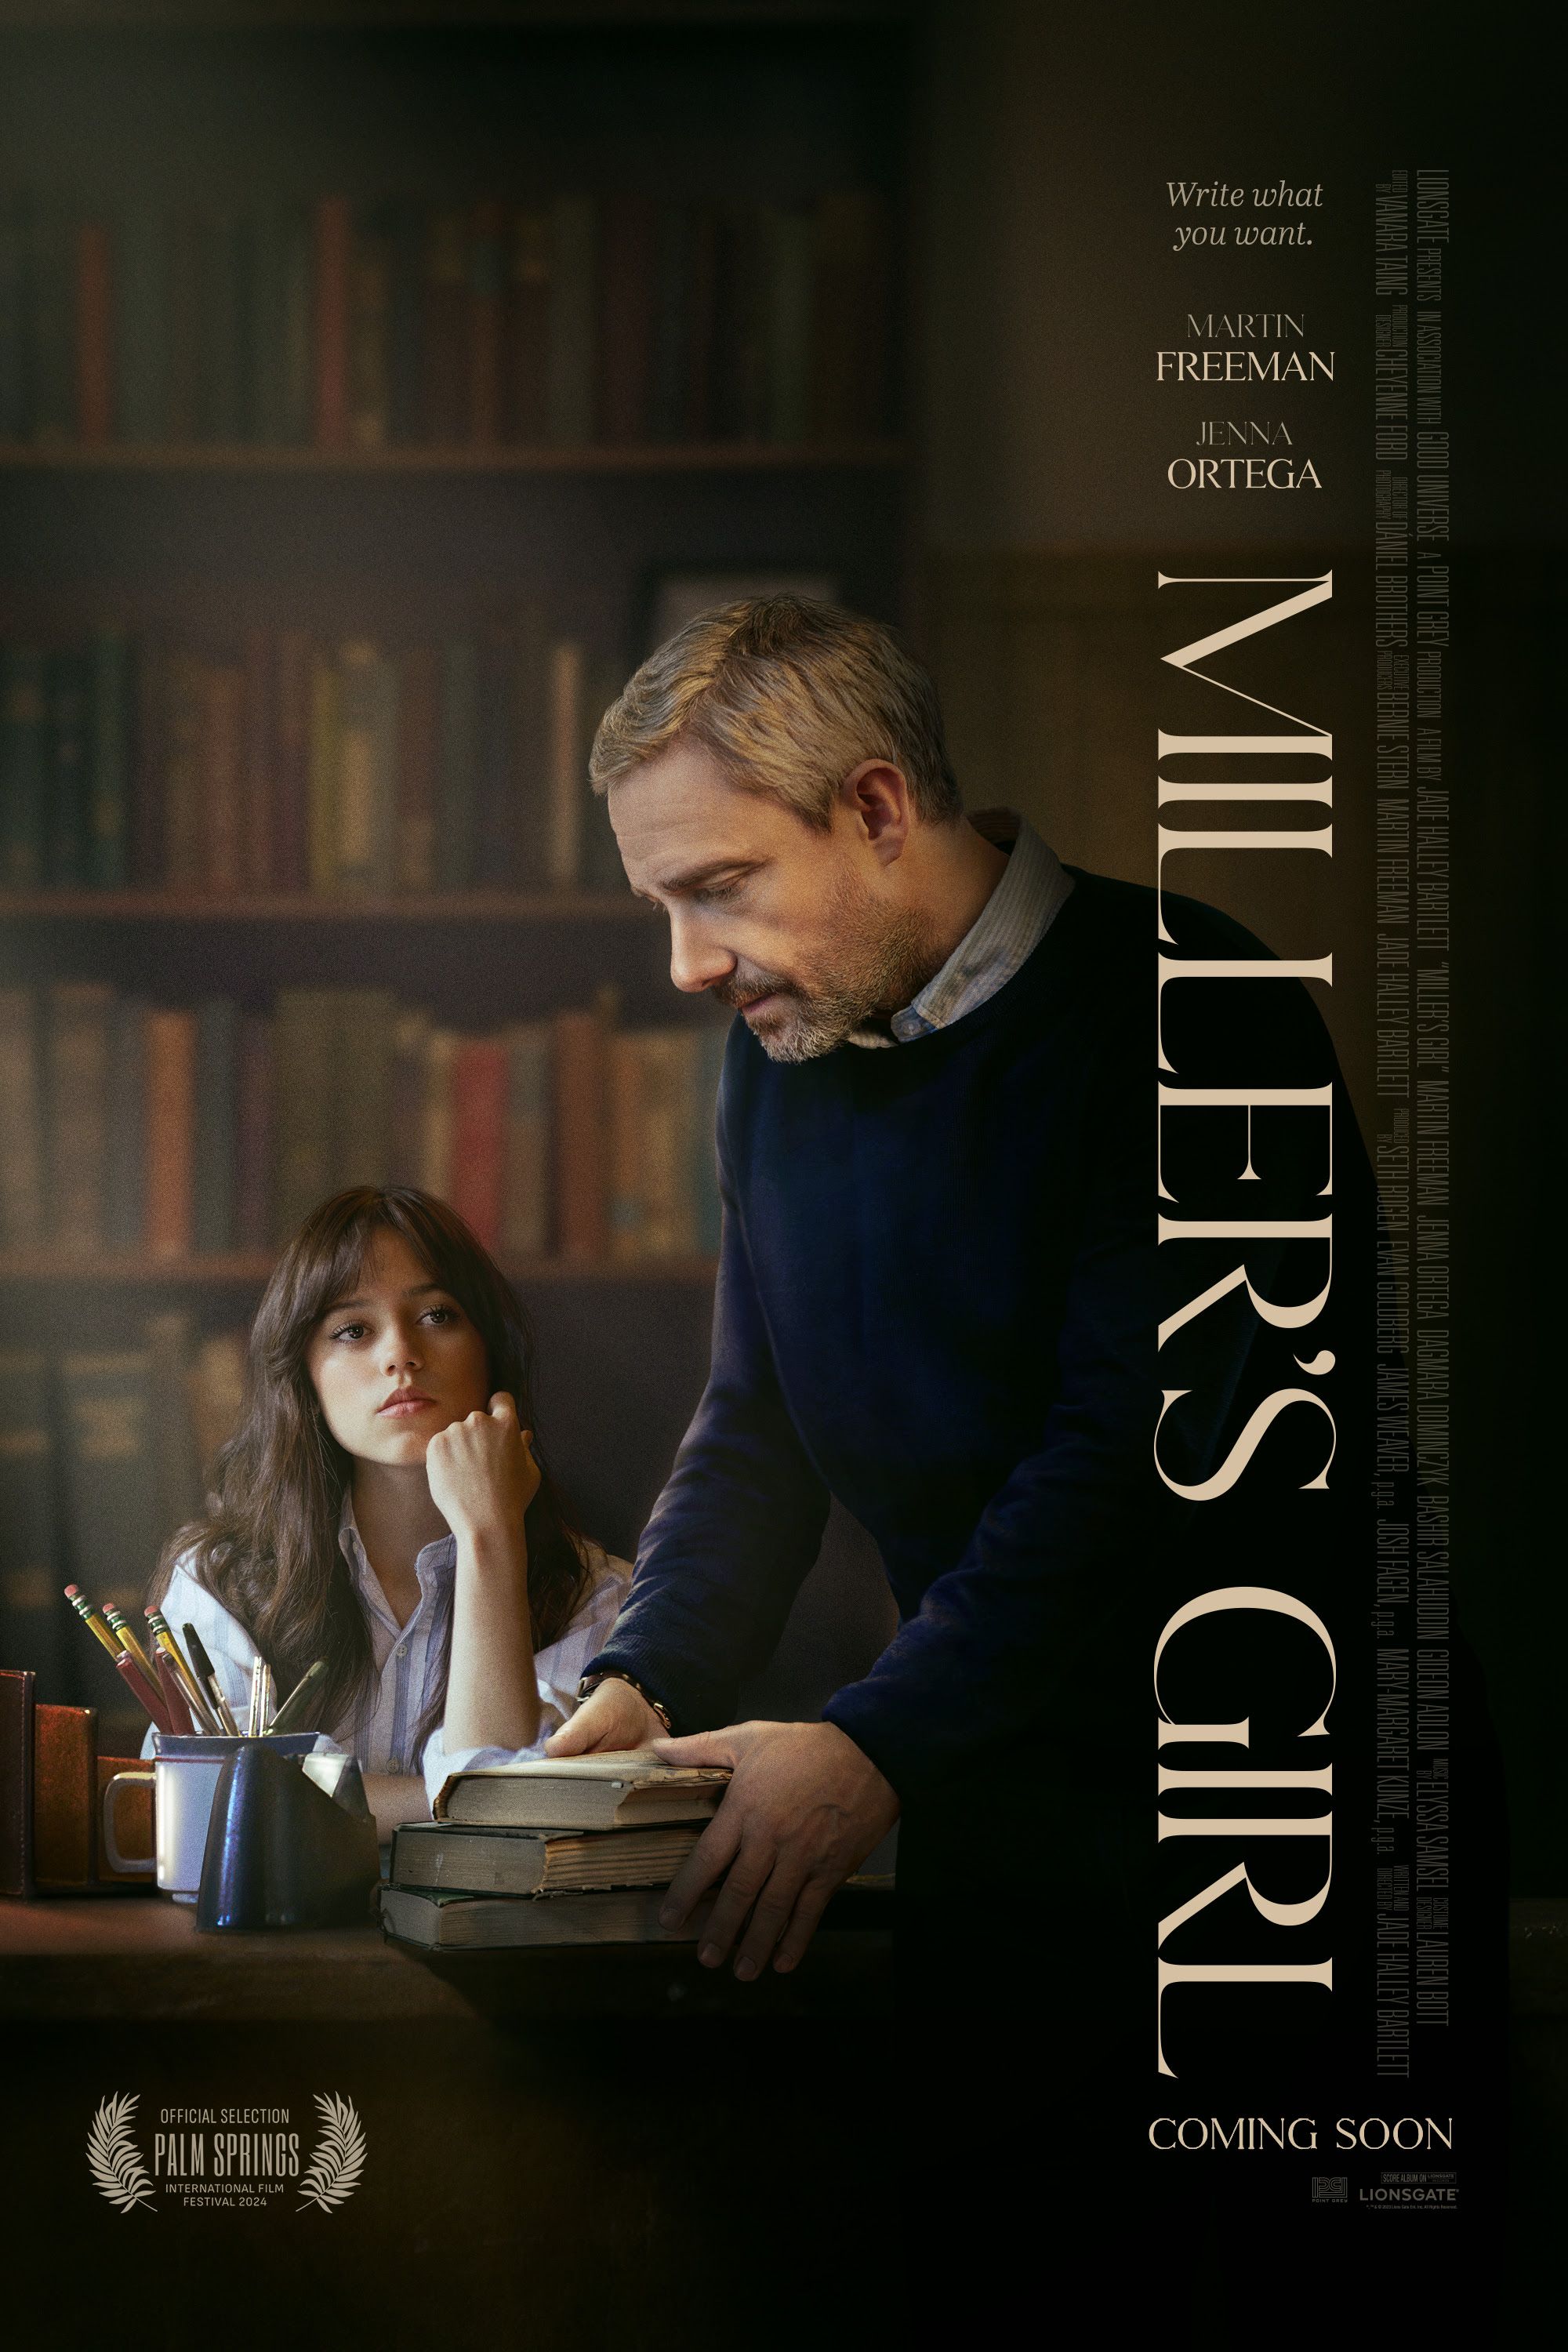 Miller's Girl Movie Poster Featuring Martin Freeman and Jenna Ortega